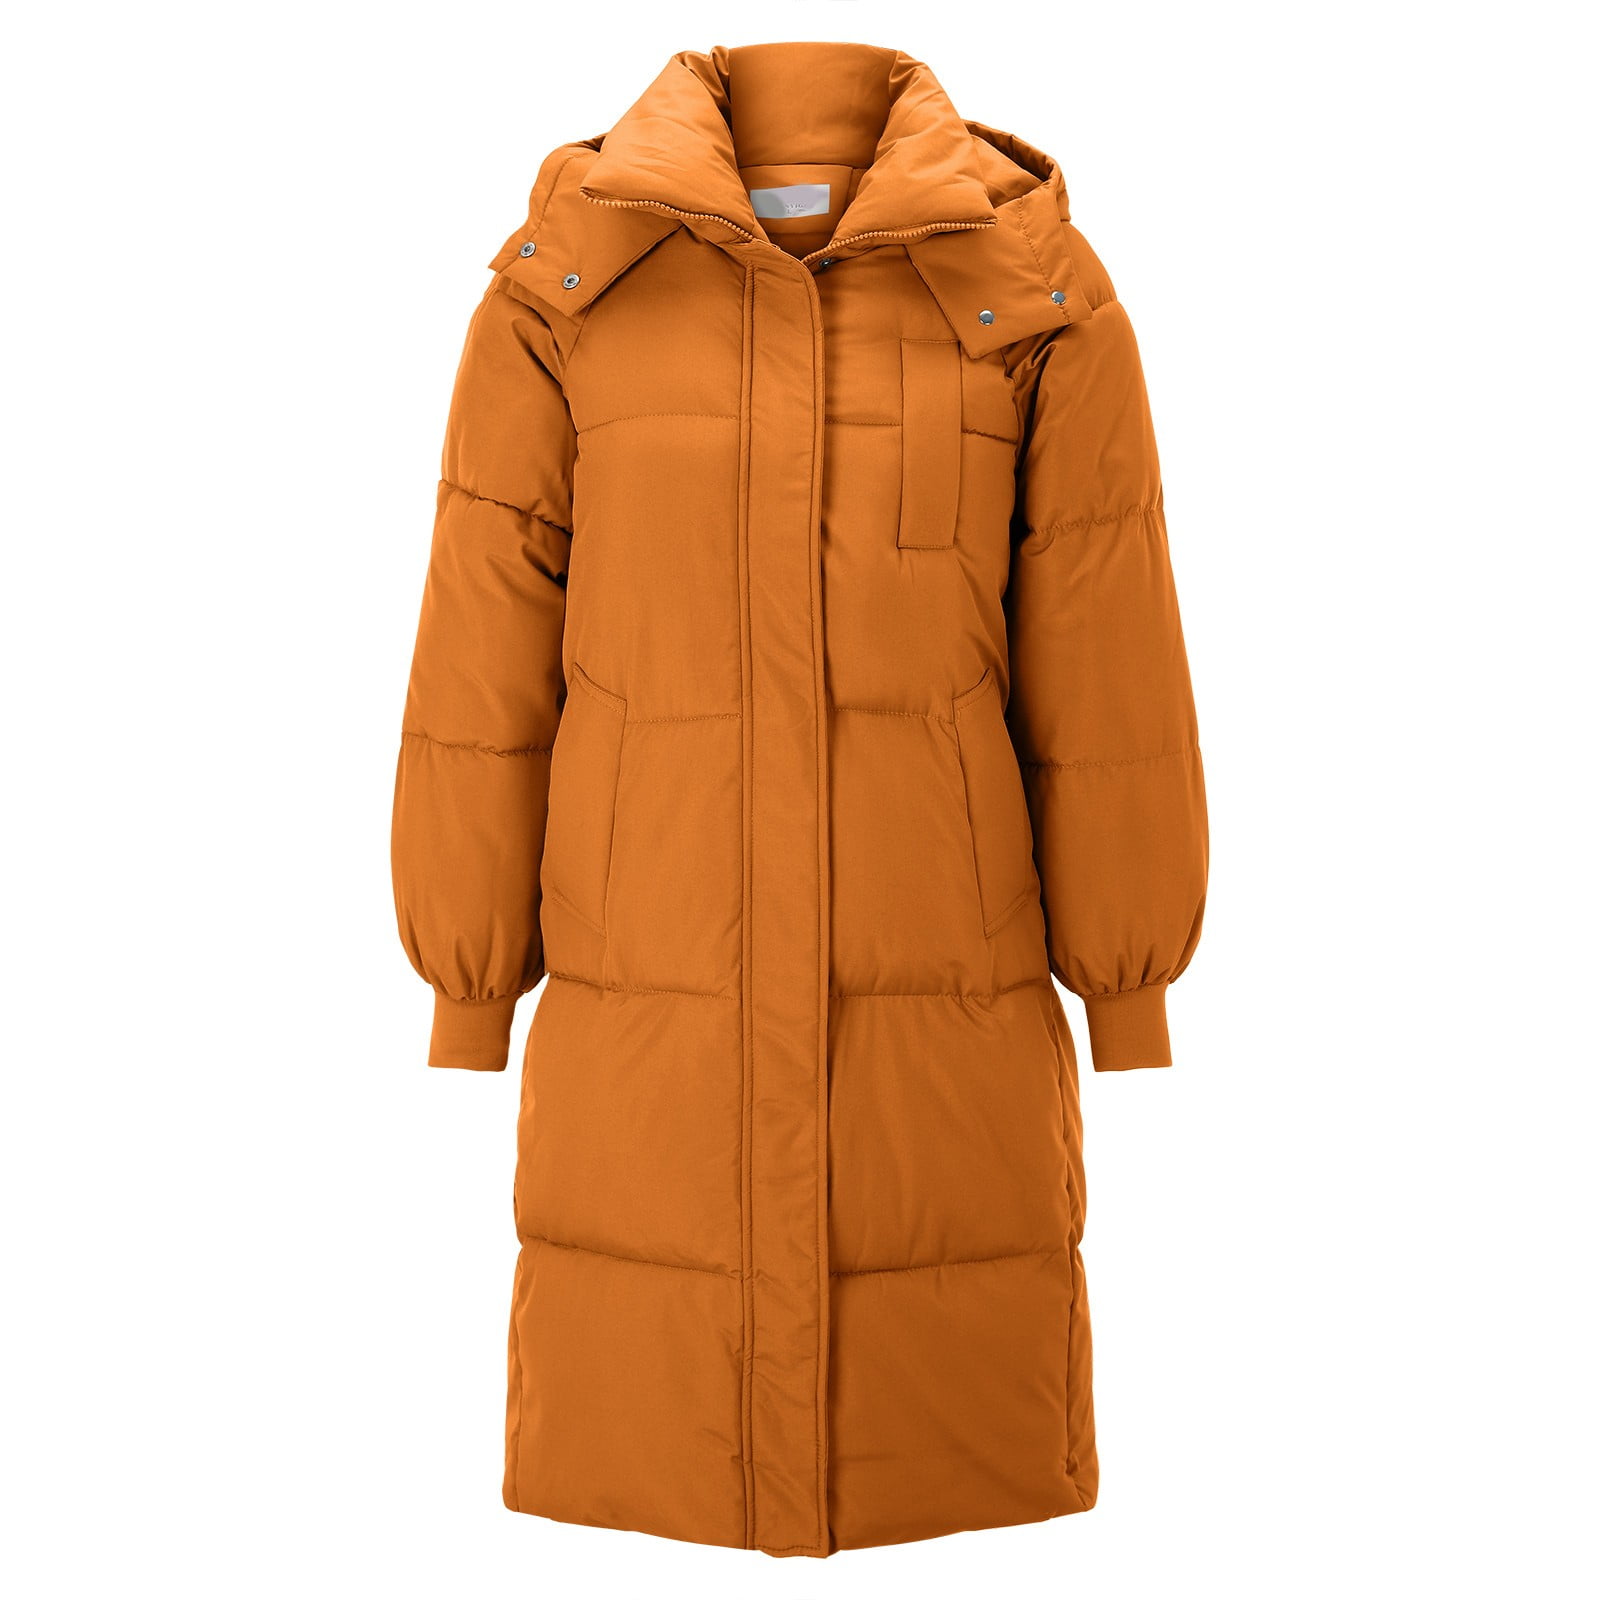 ZIZOCWA Women'S Puffer Jacket Full Zip Long Sleeve Stretchy Winter Coat ...